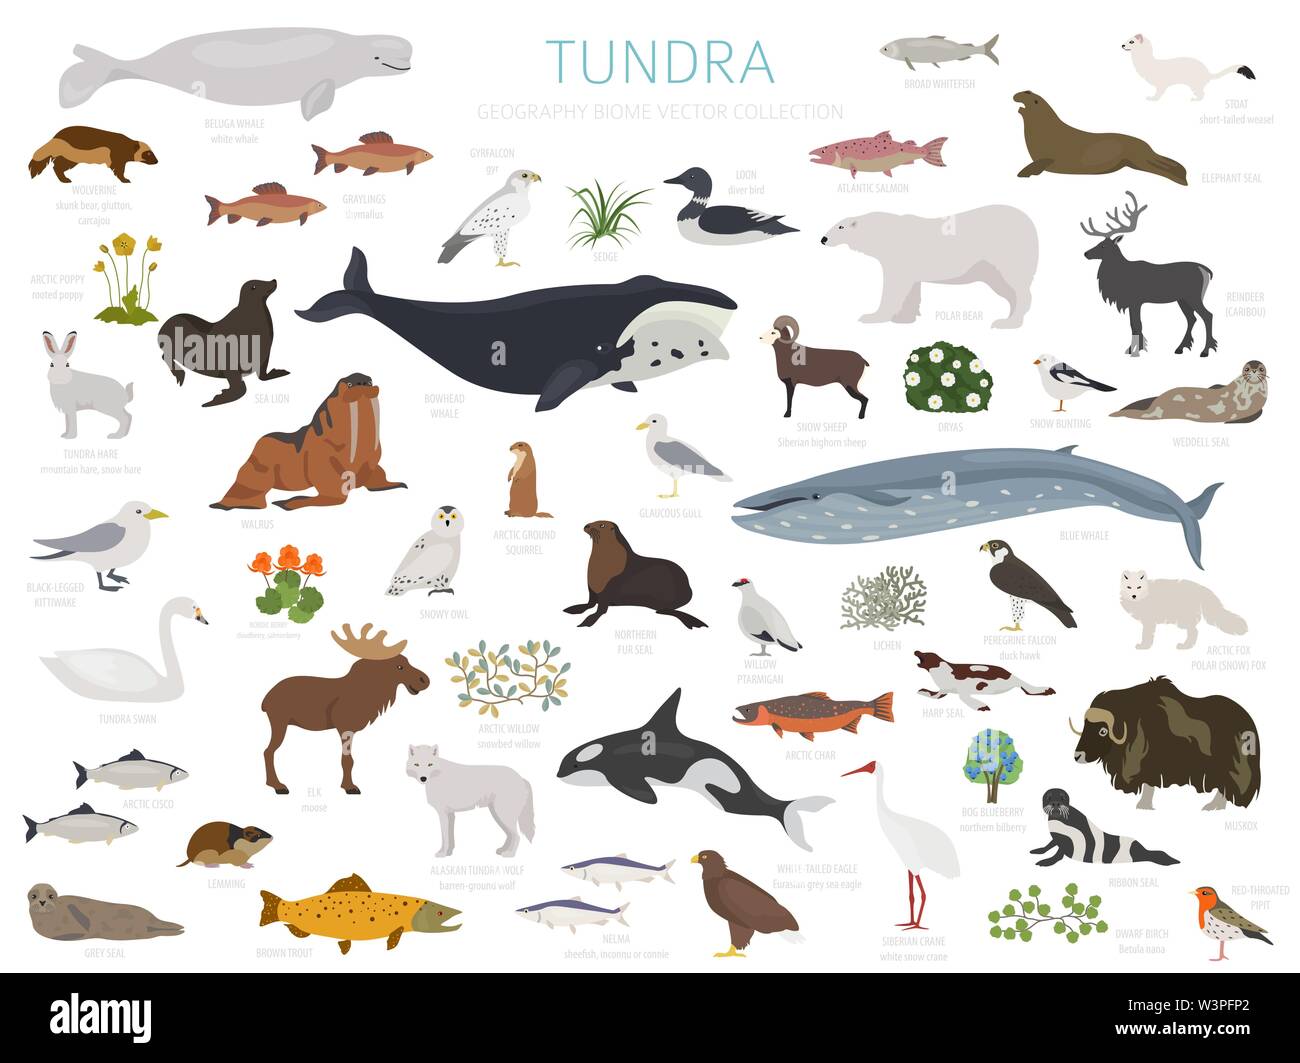 Tundra Biome Terrestrial Ecosystem World Map Arctic Animals Birds Fish And Plants Infographic Design Vector Illustration Stock Vector Image Art Alamy